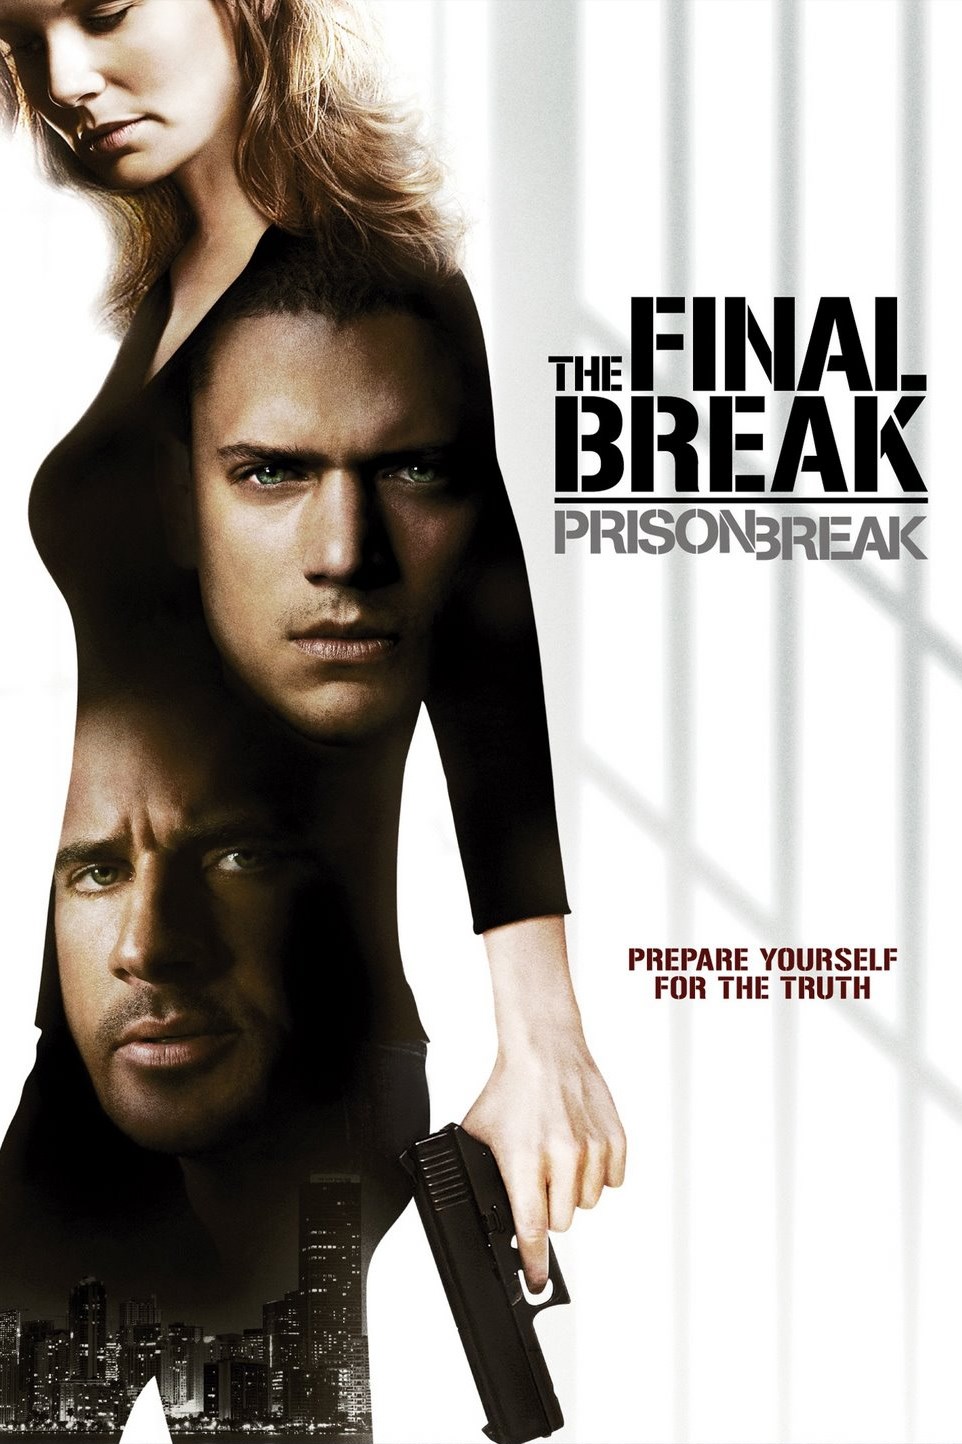 prison break season 1 torrent download with english subtitles